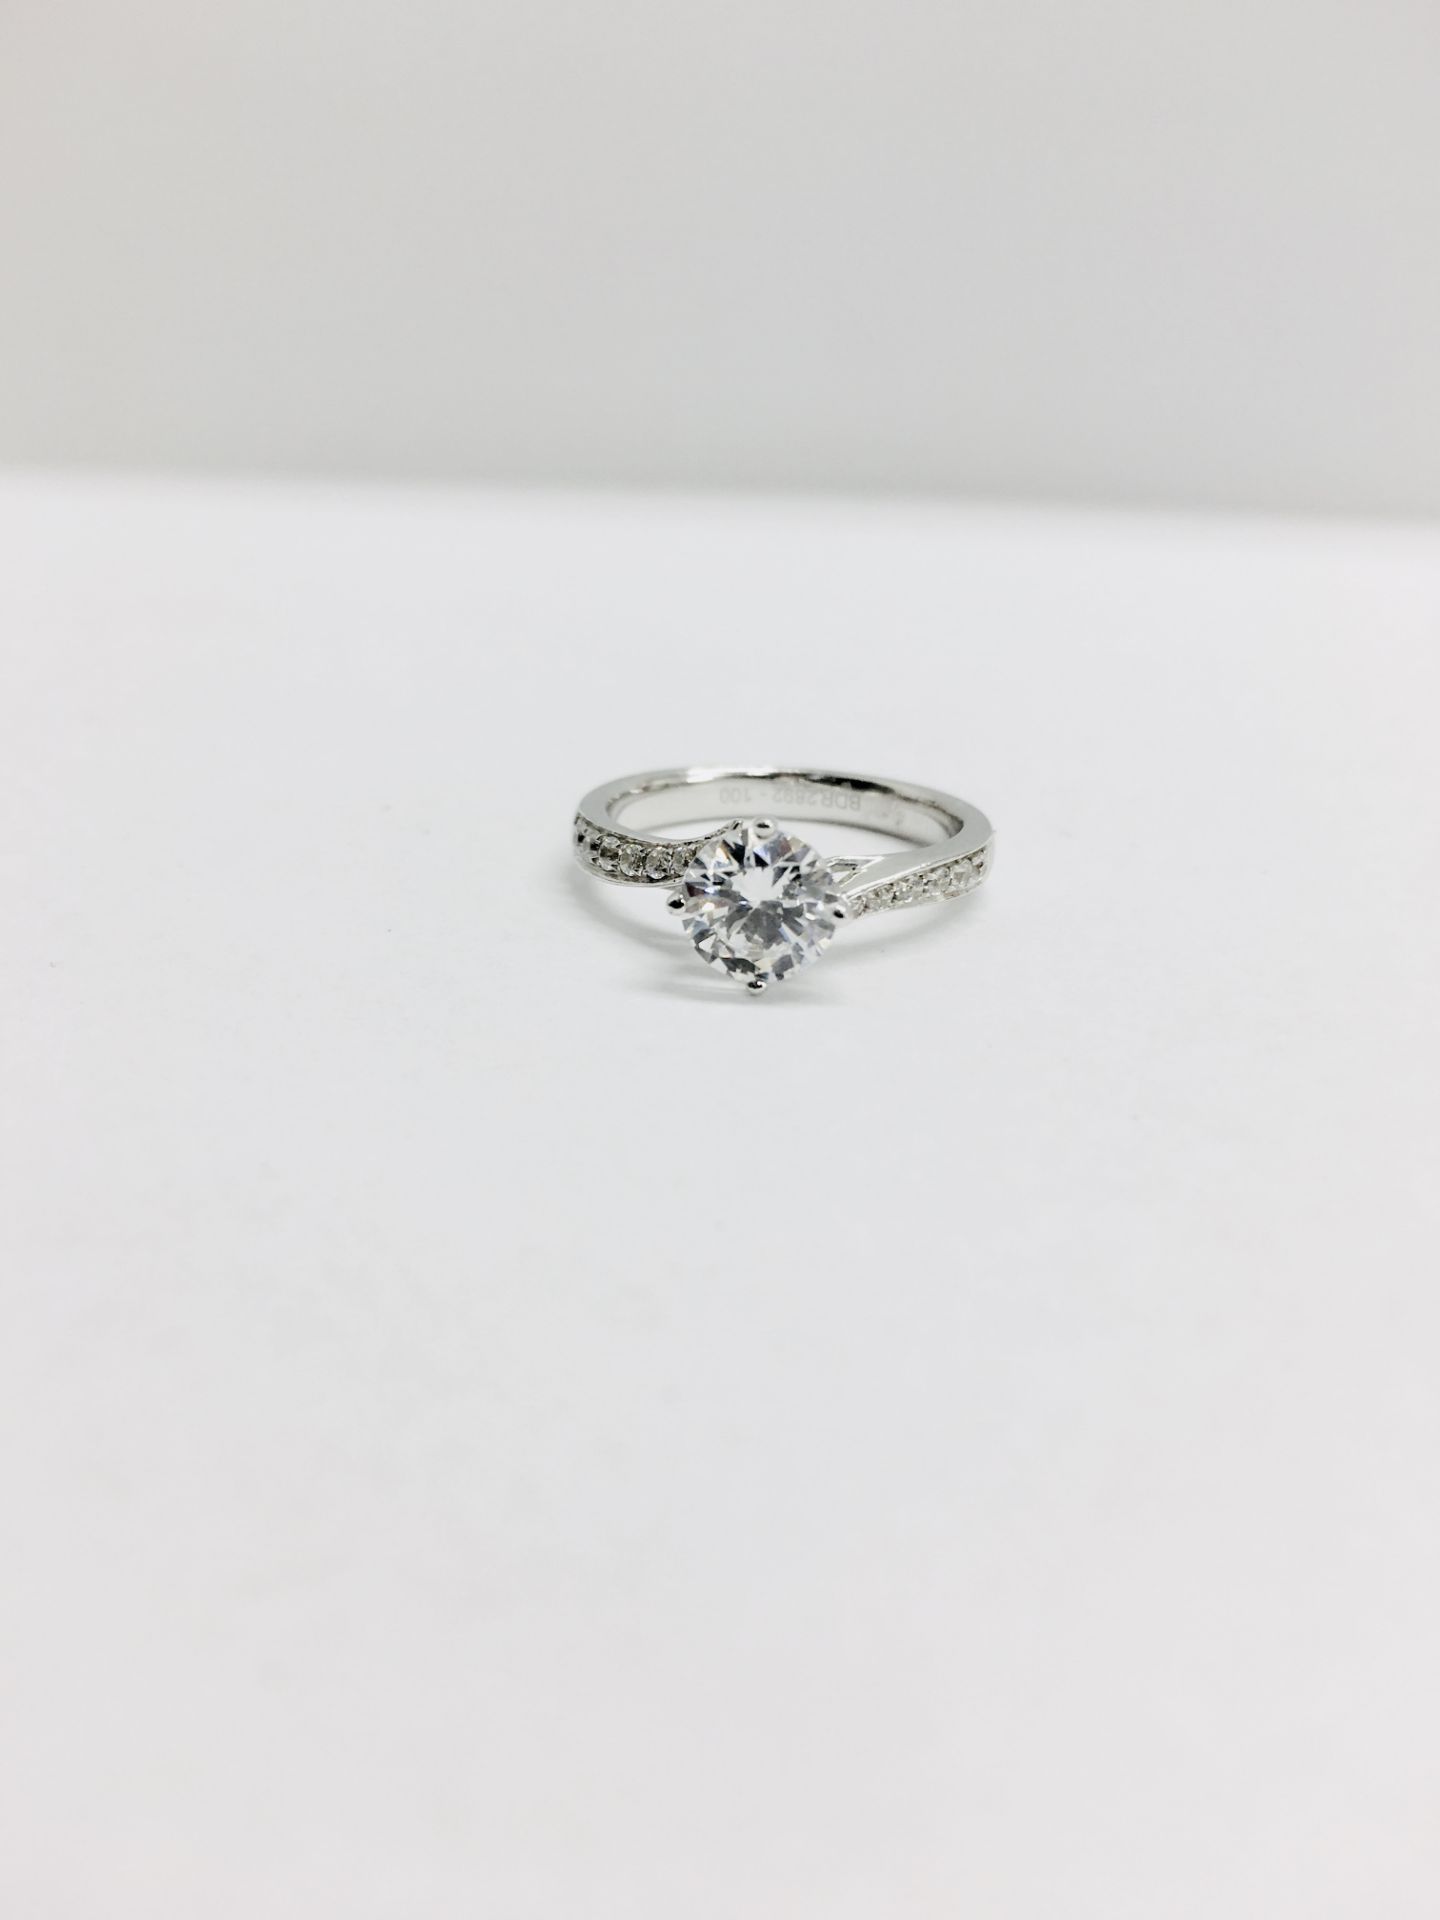 Platinum diamond solitaire ring ,0.50ct vs clarity i colour natural brilliant cut diamond(clarity